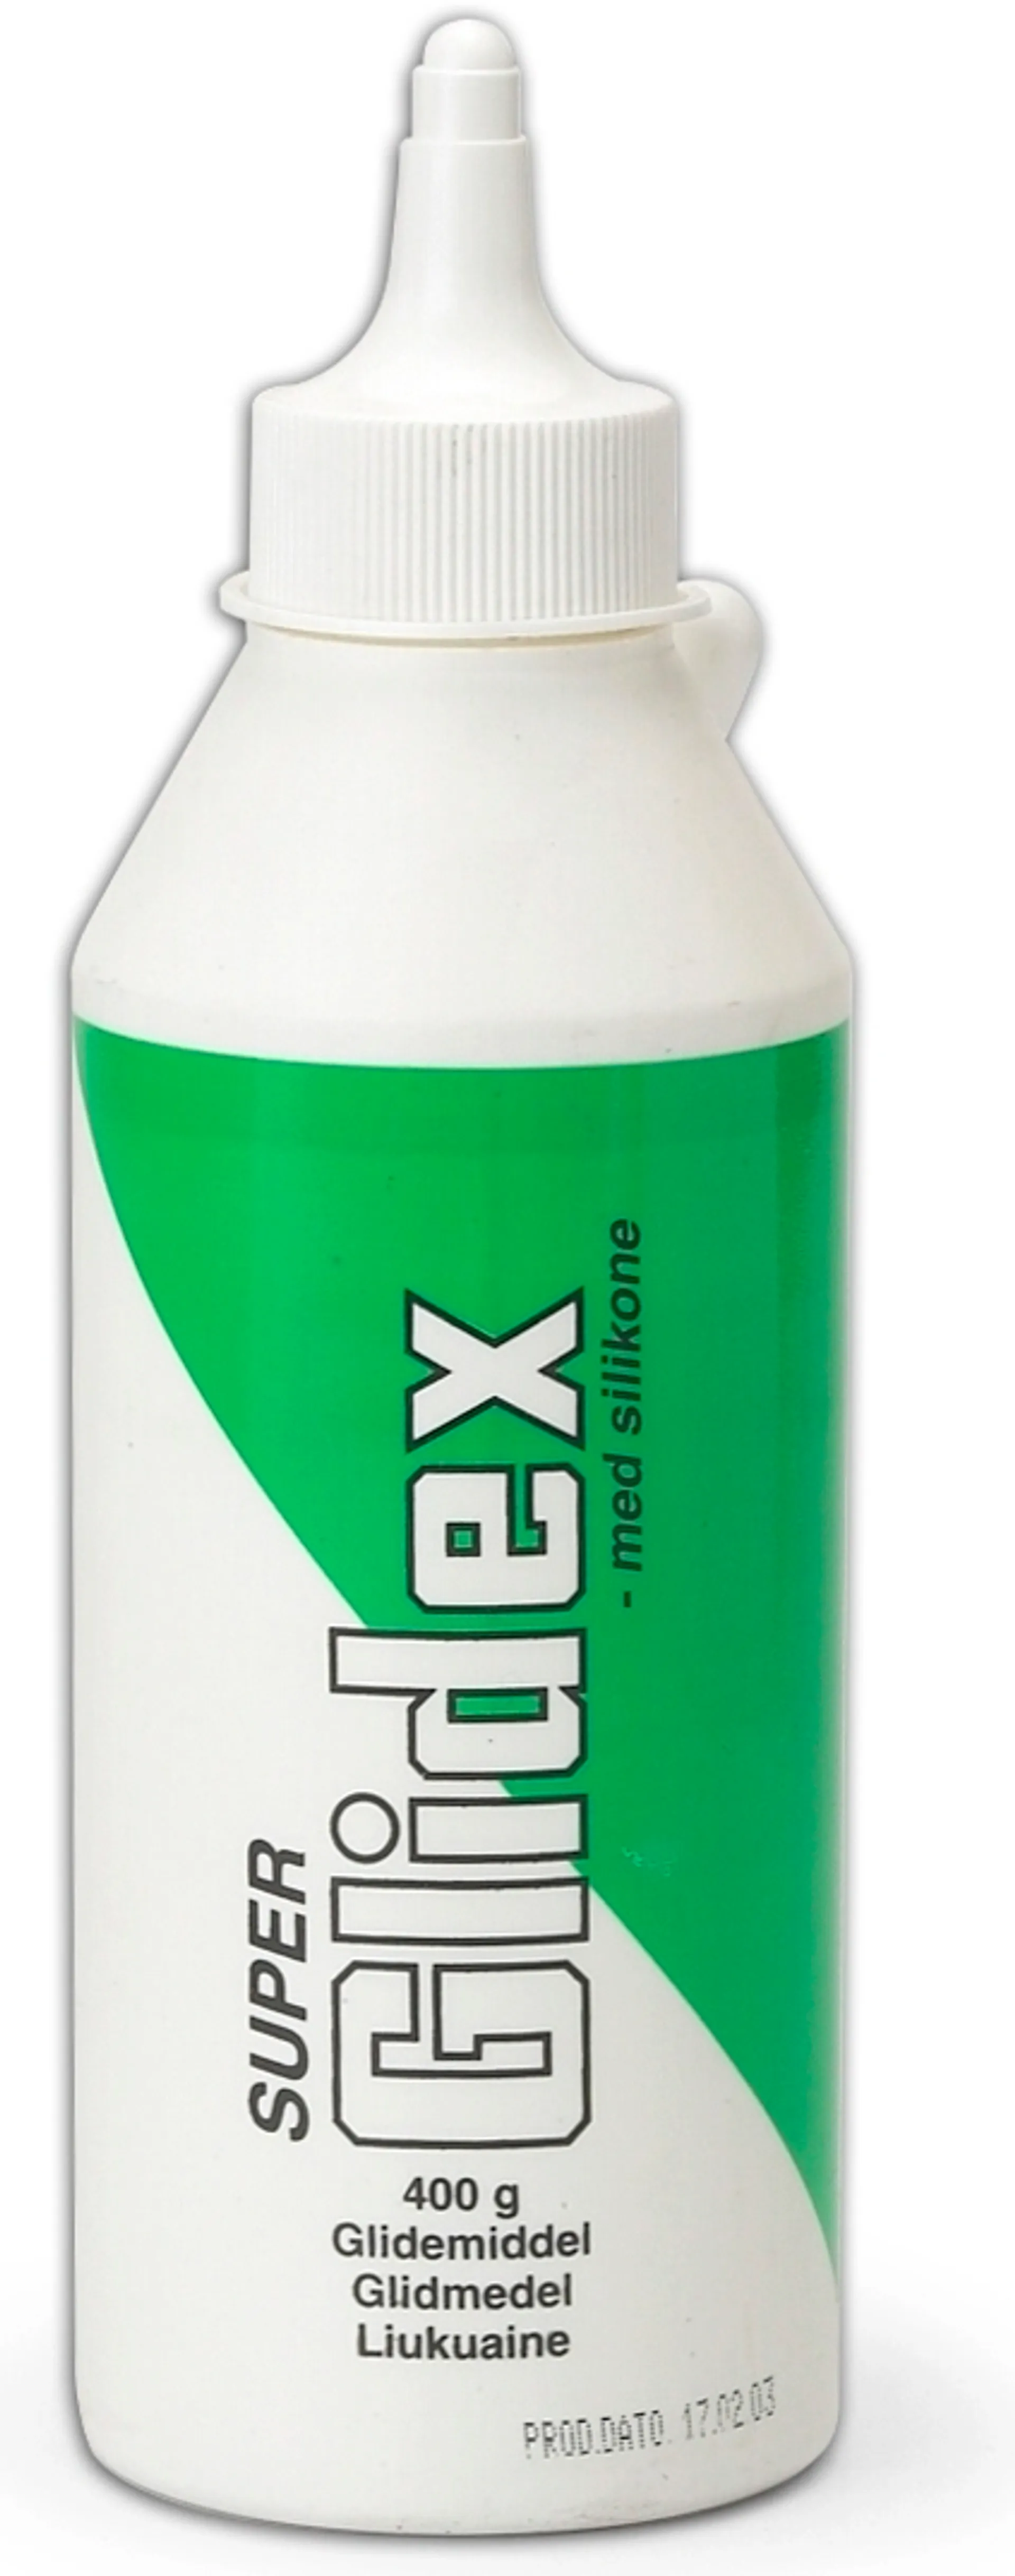 Unipak liukuaine superglidex 400 g